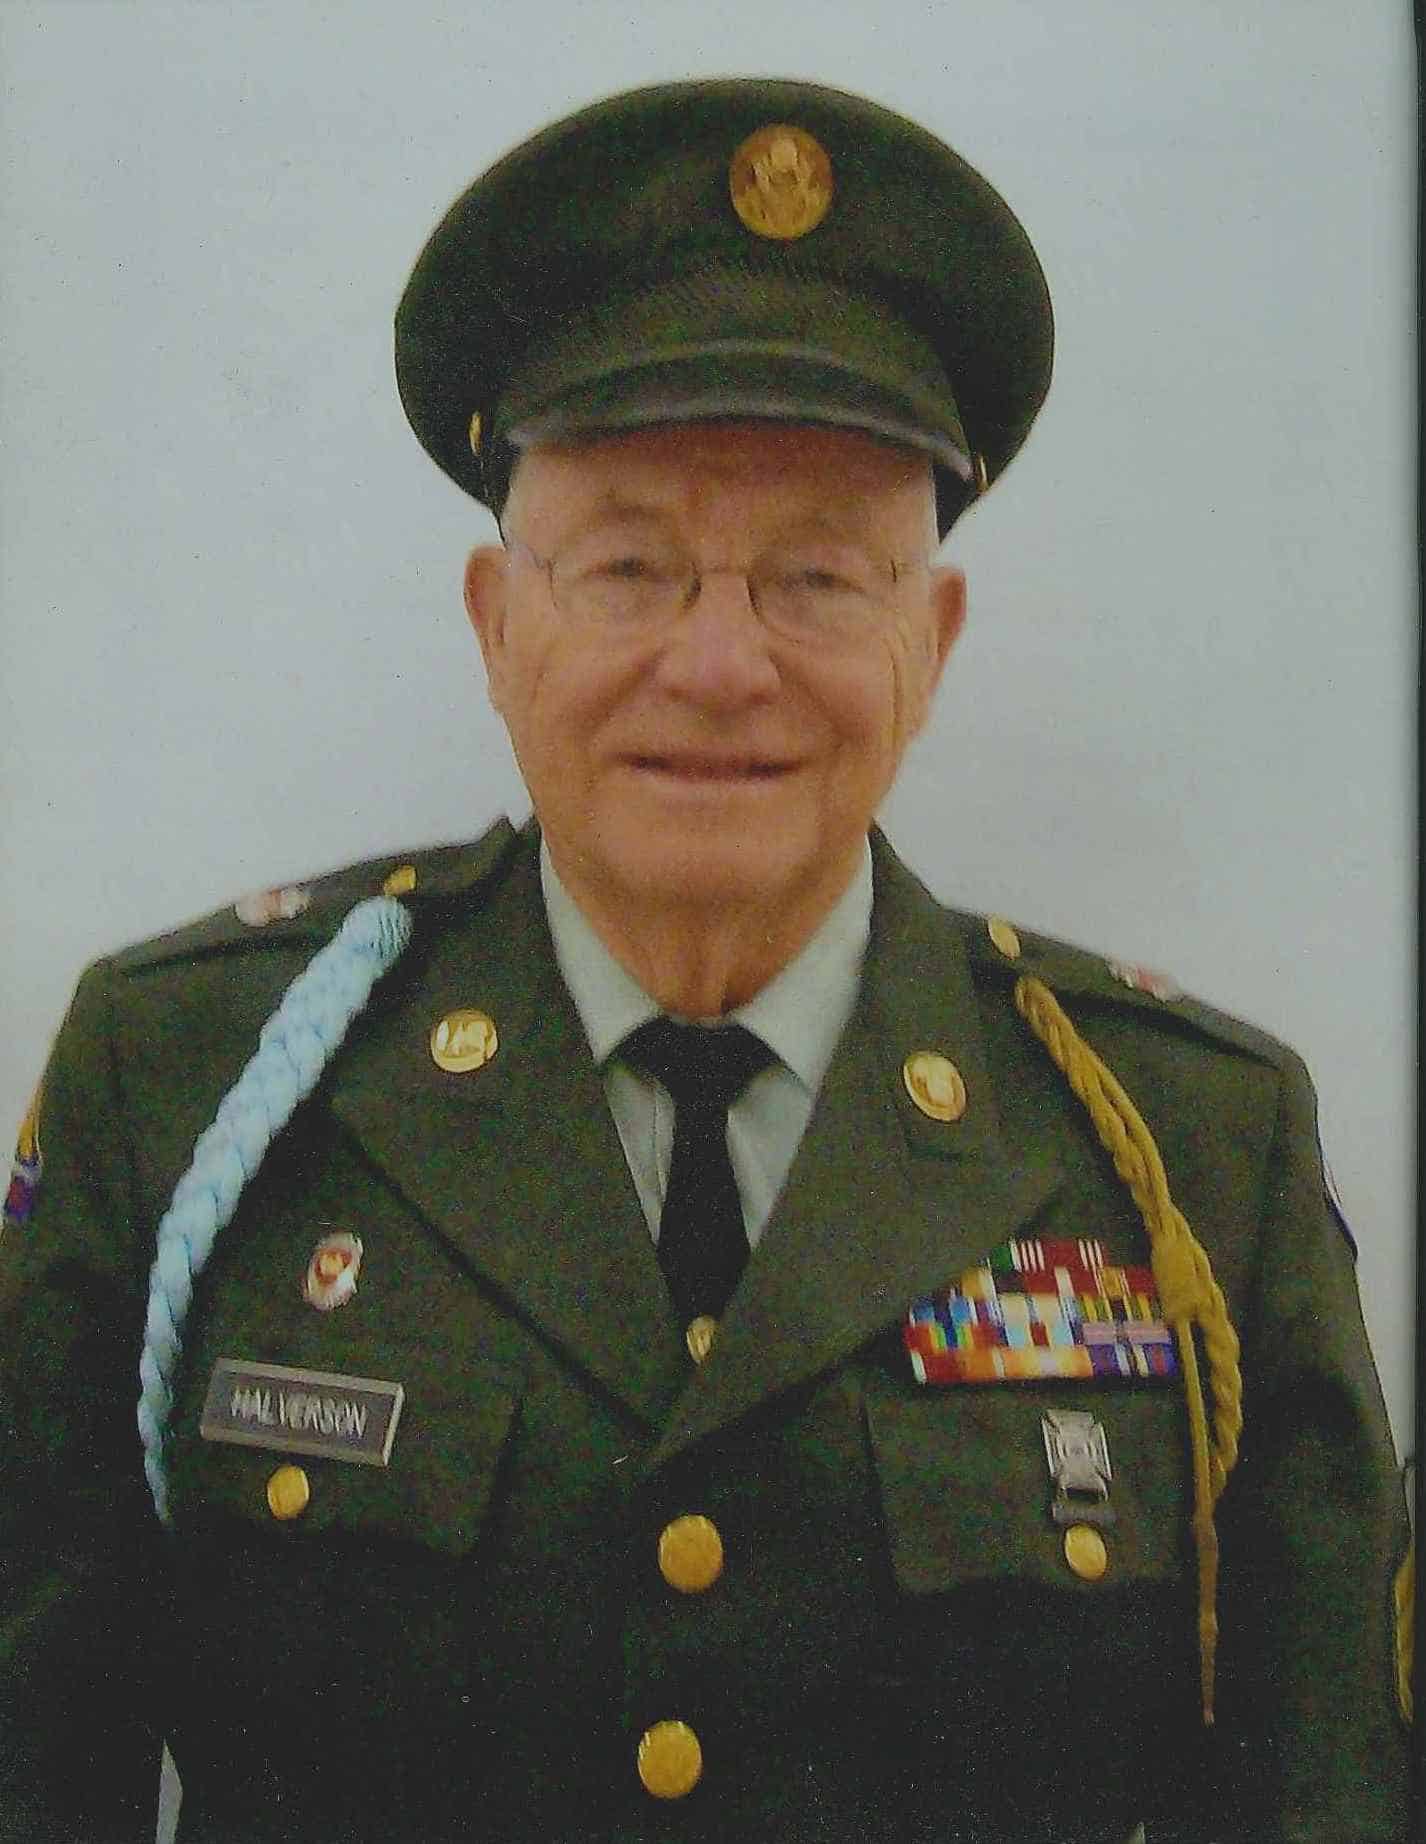 Donald G. Halverson